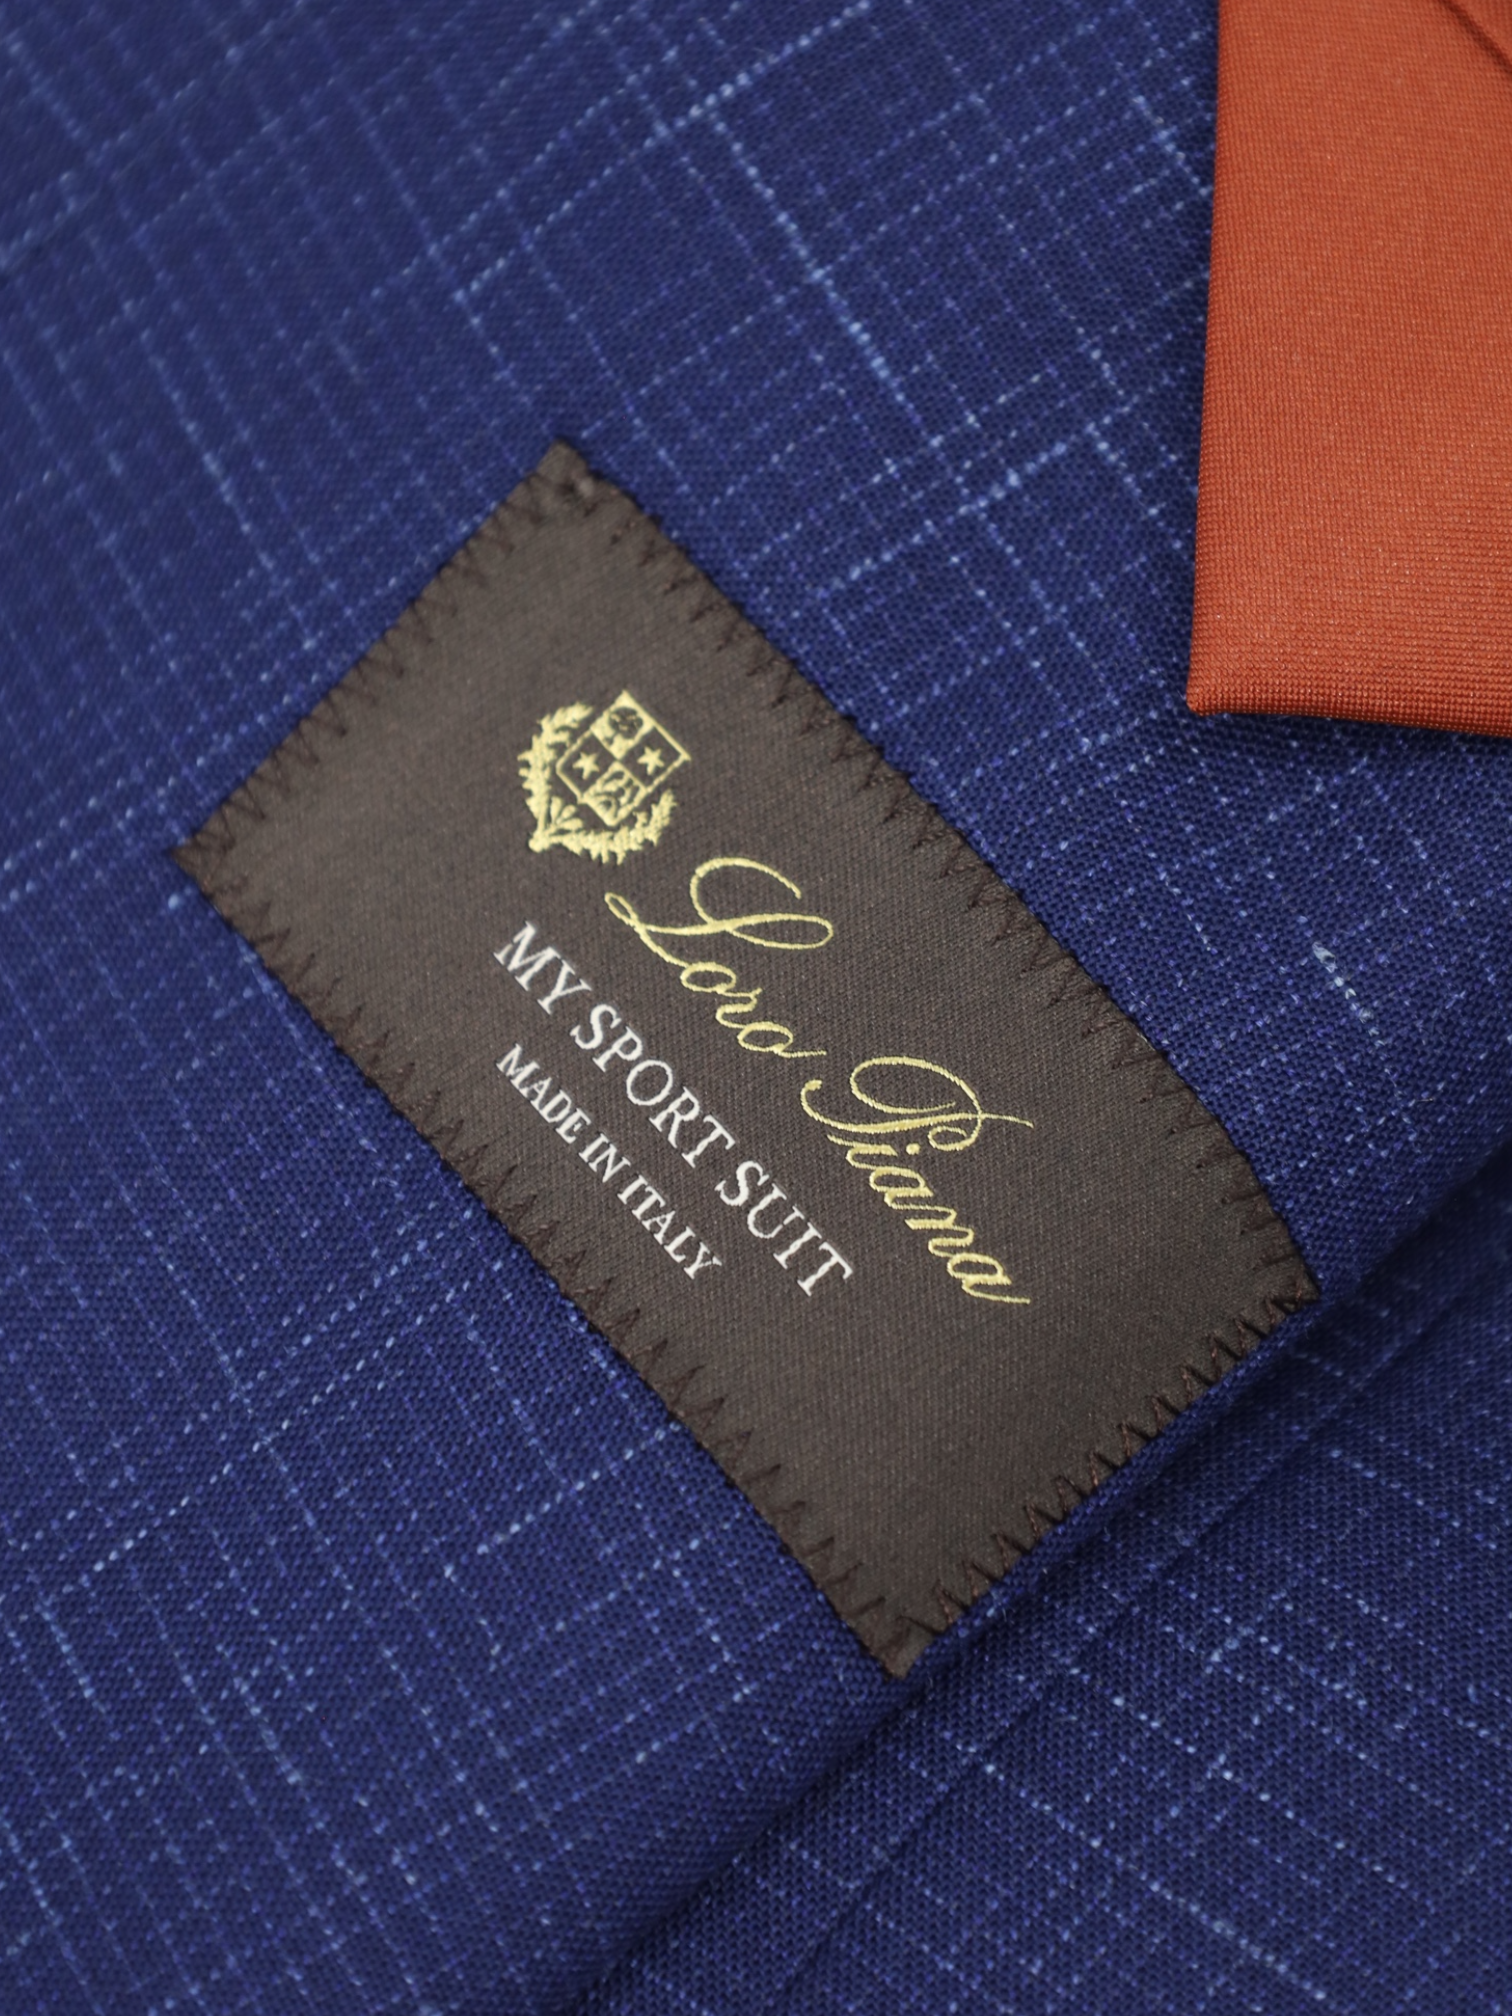 Loro Piana Neapolitan Blue Wool, Linen & Silk “Sports” Suit